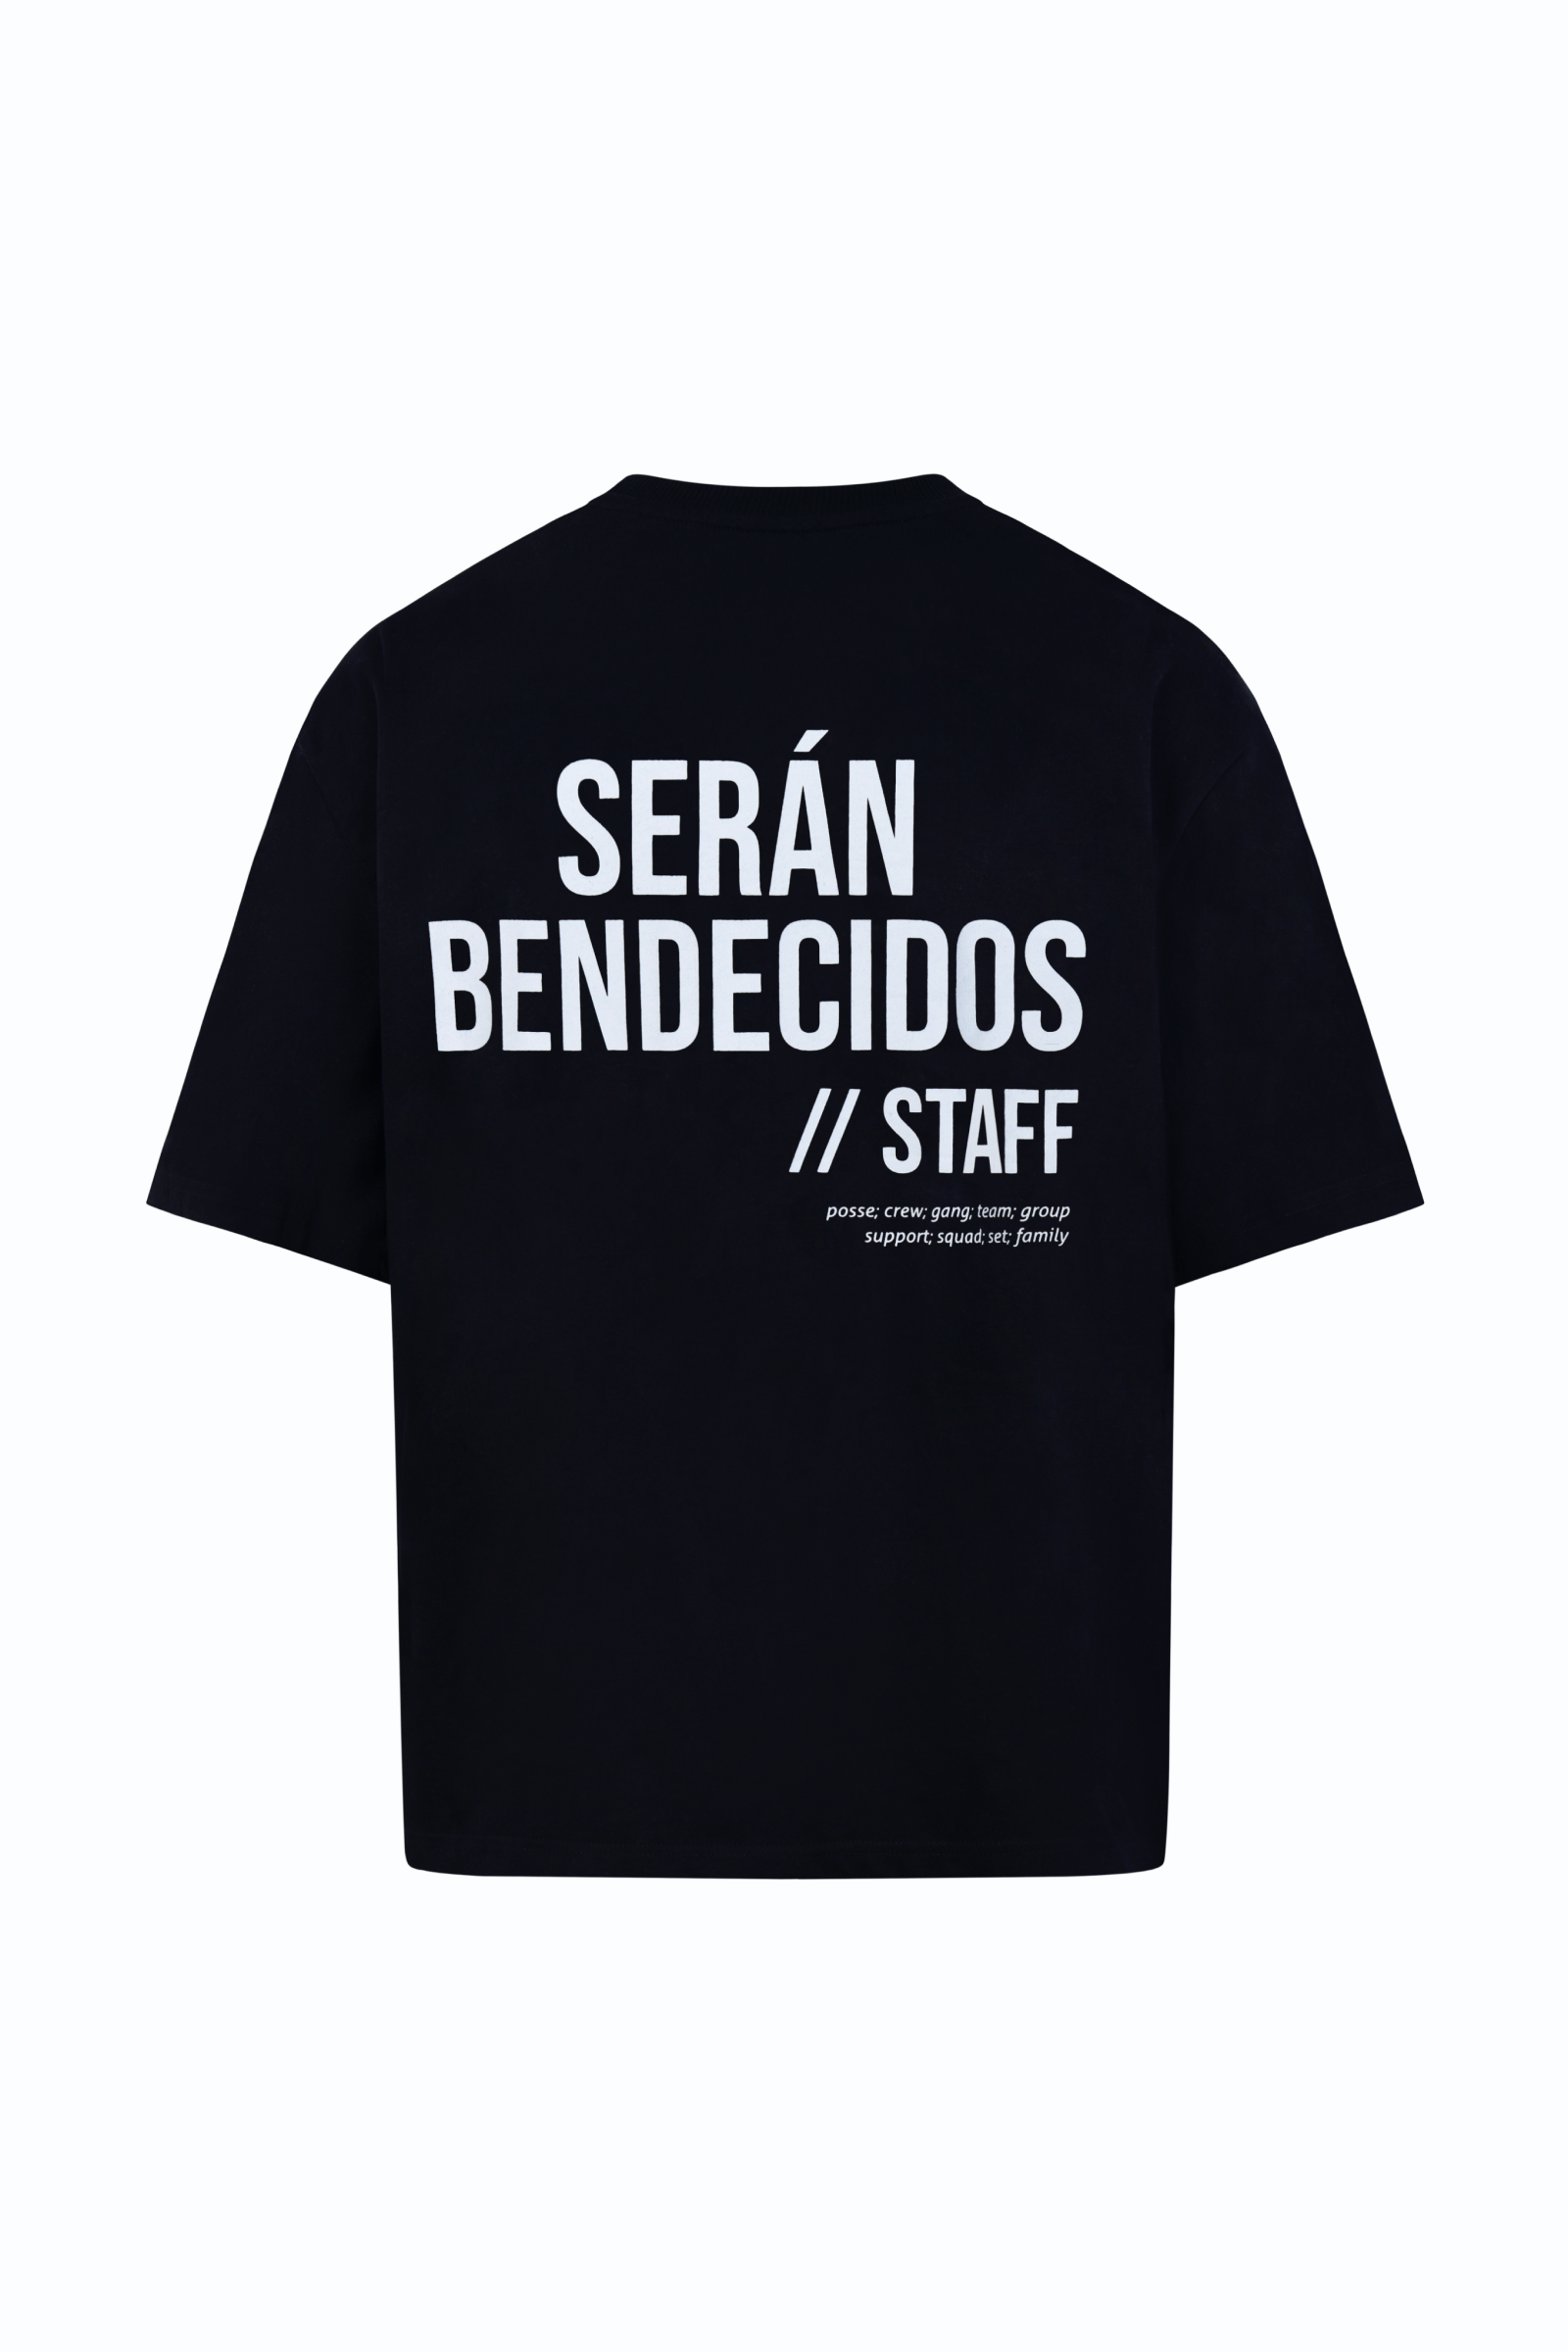 Shop Staff T Shirt Black - Seran Bendecidos